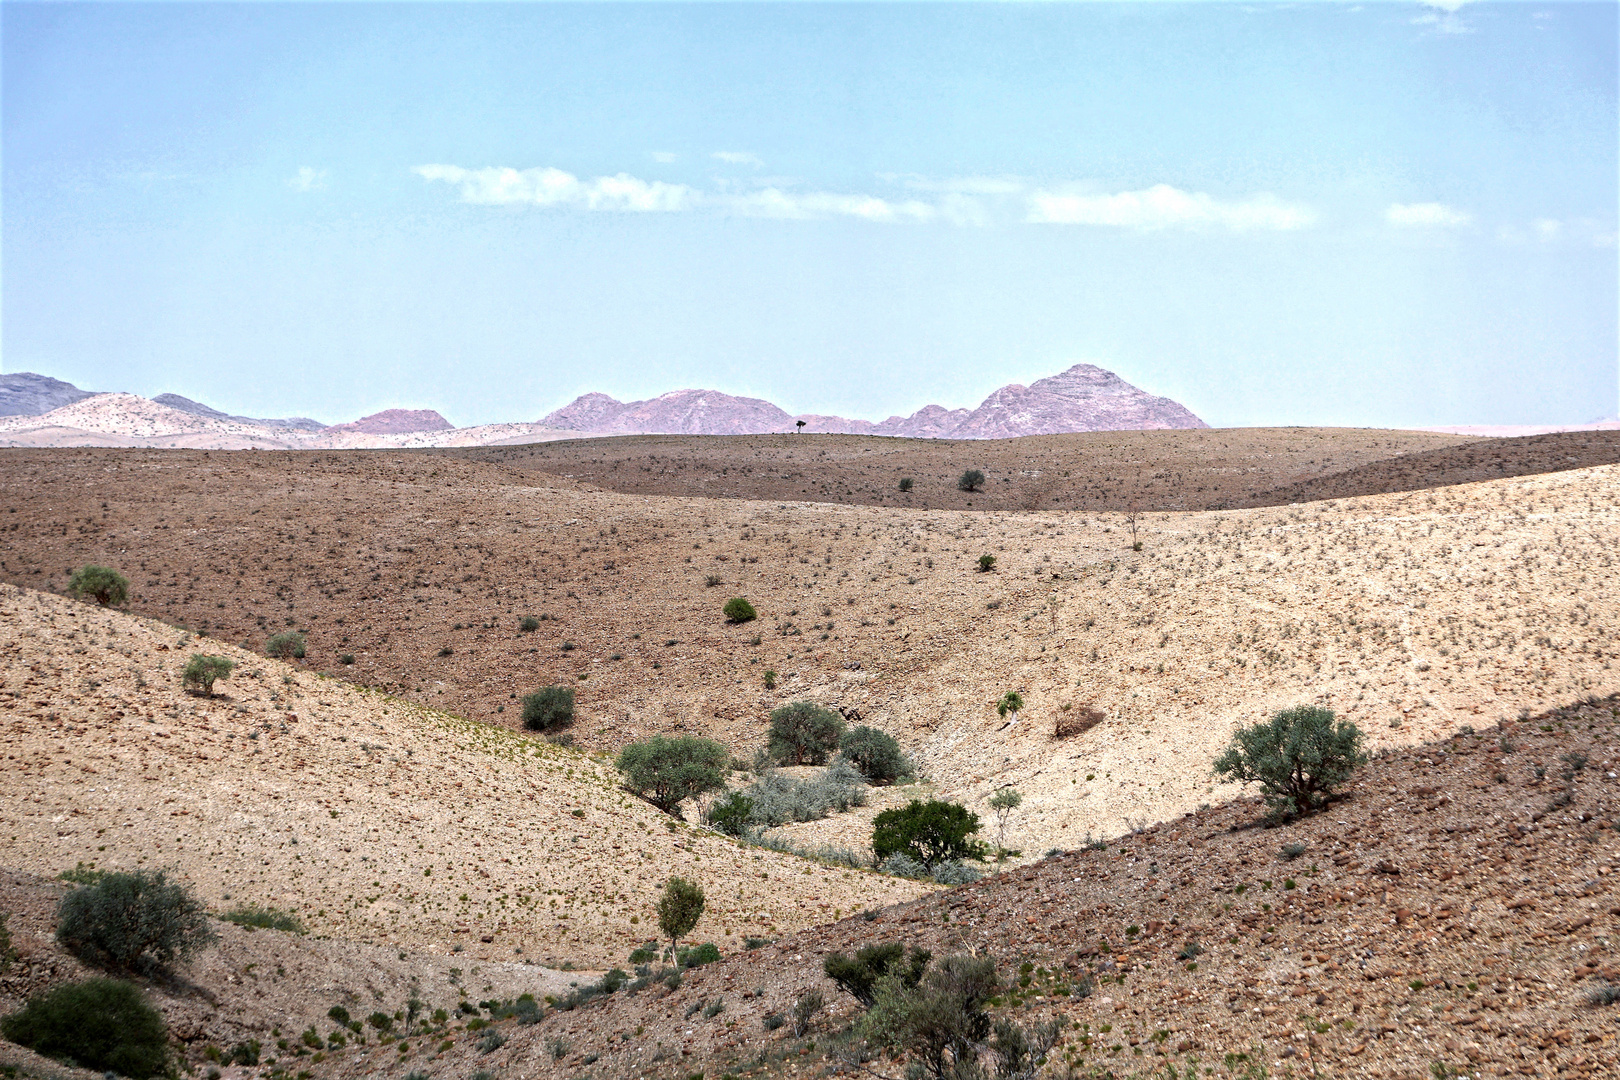 Faszination Namib